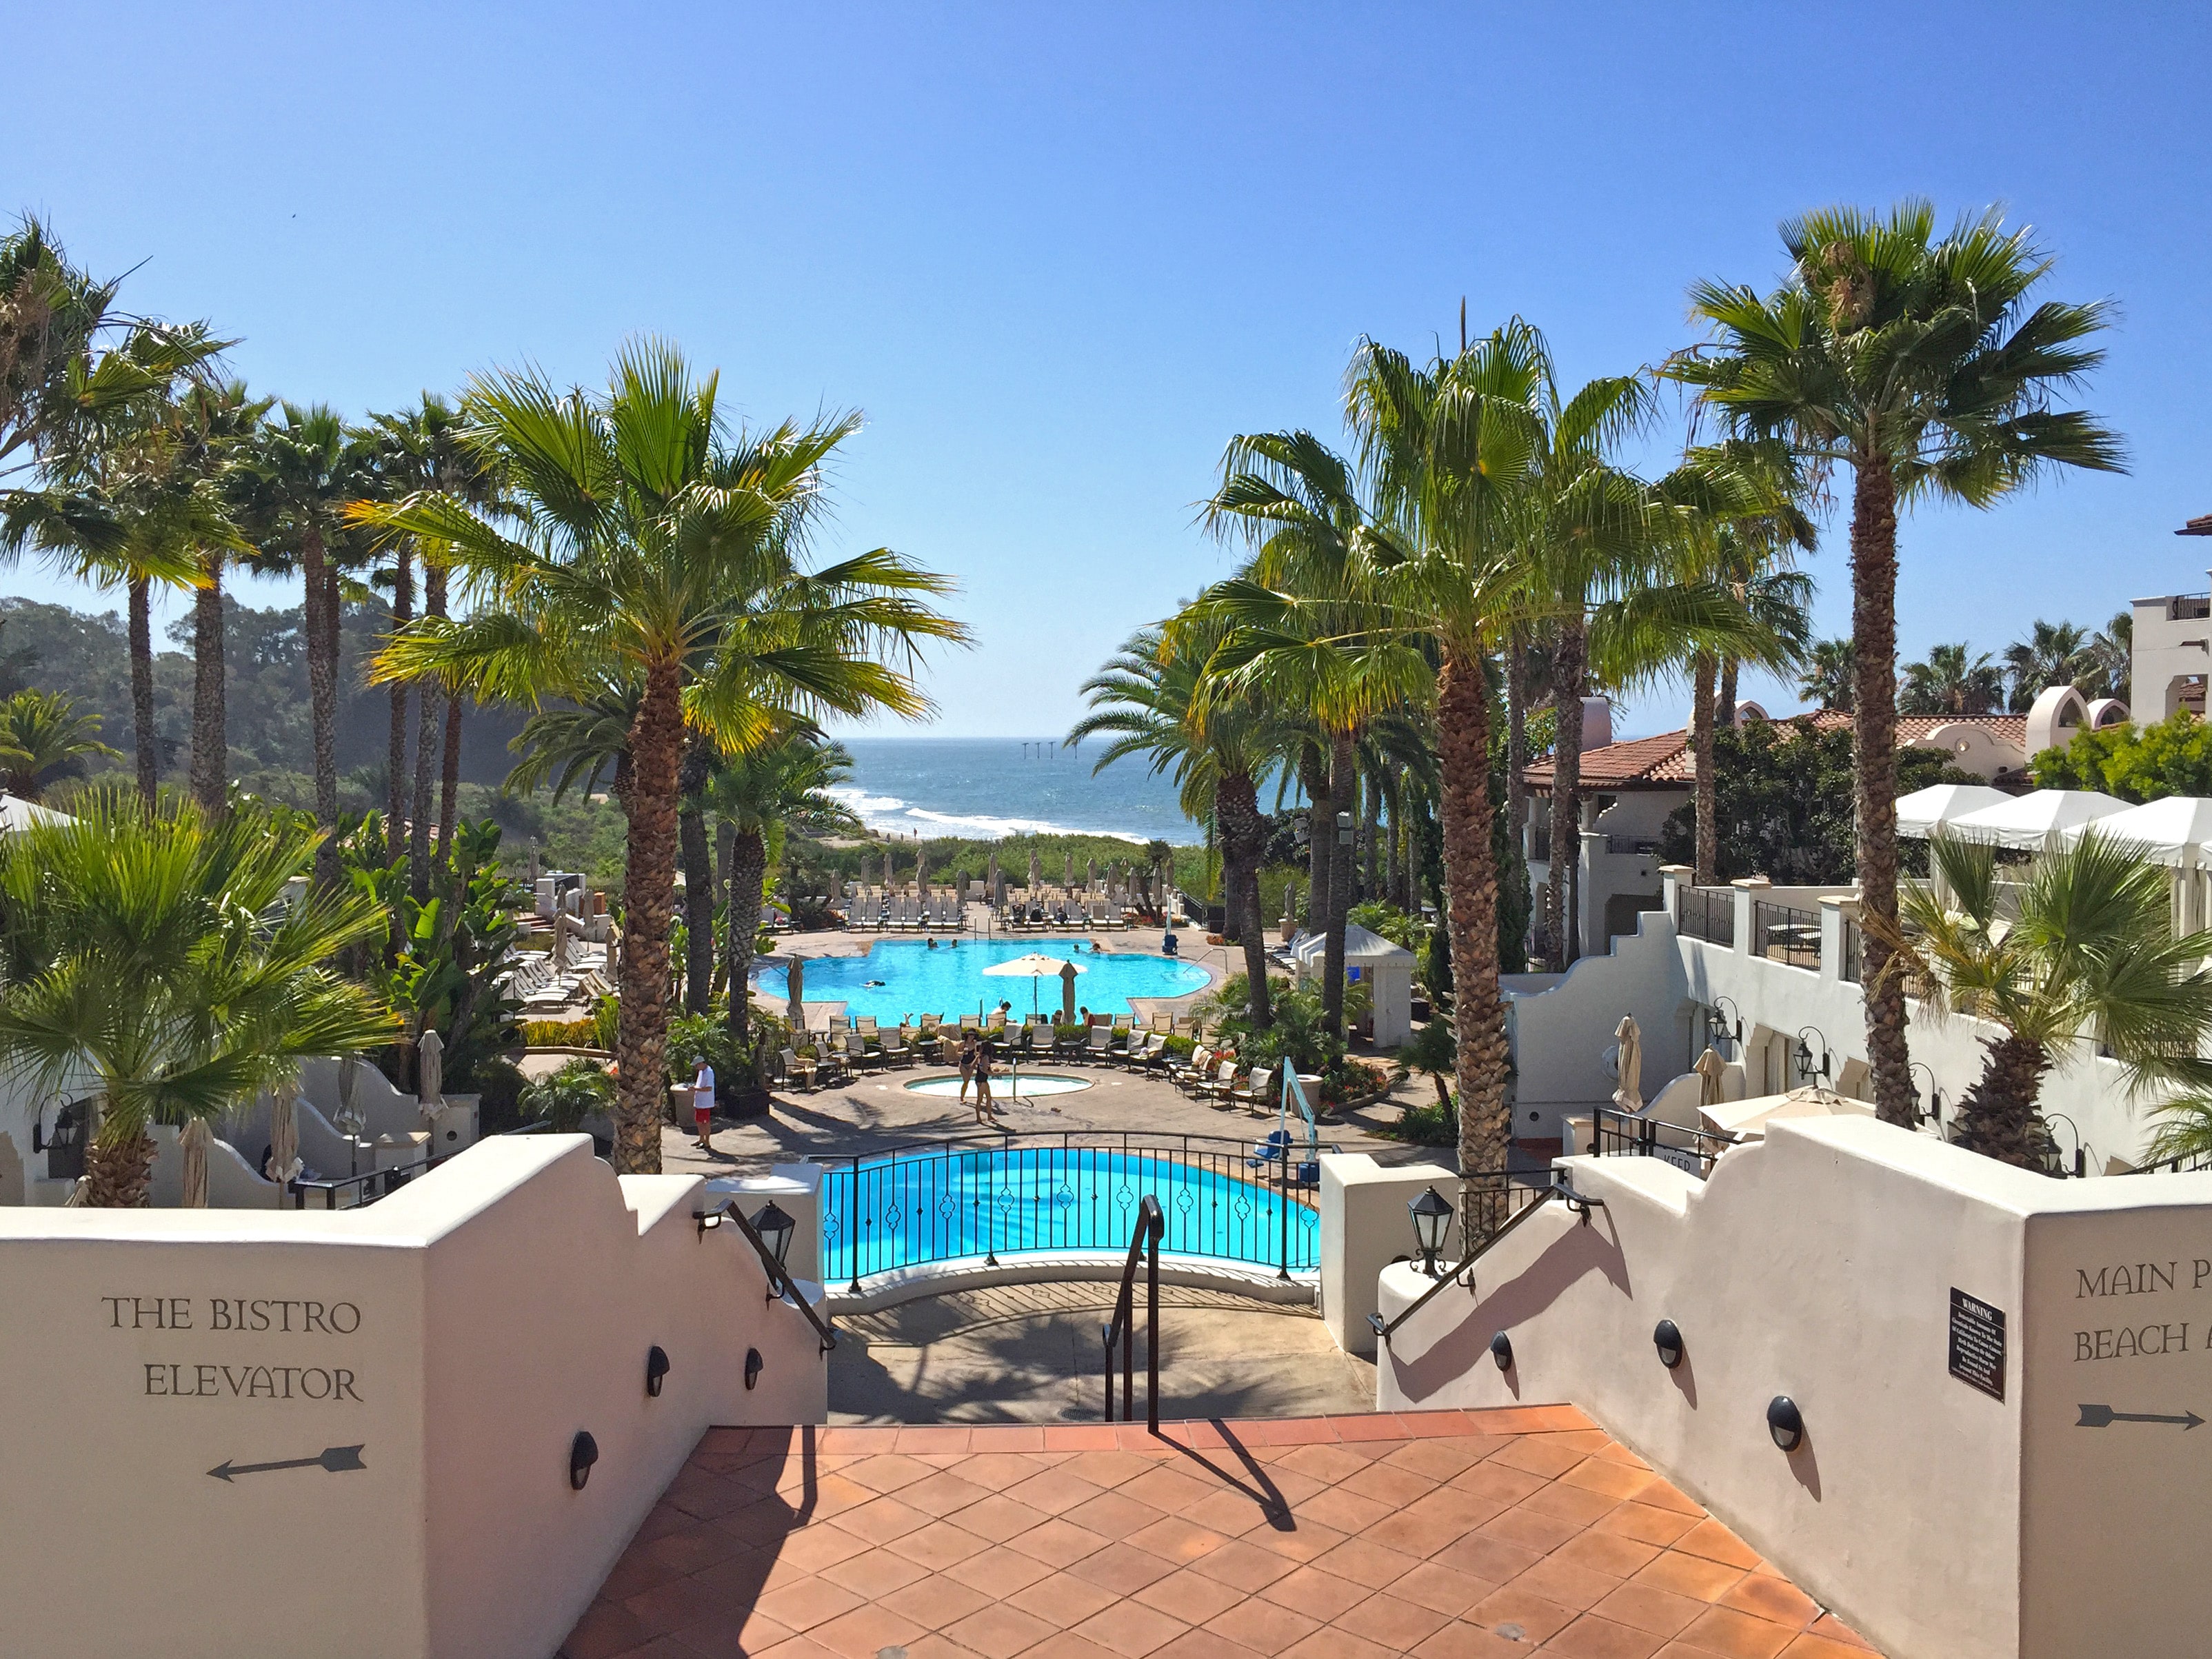 Santa Barbara Hotel - Bacara Resort